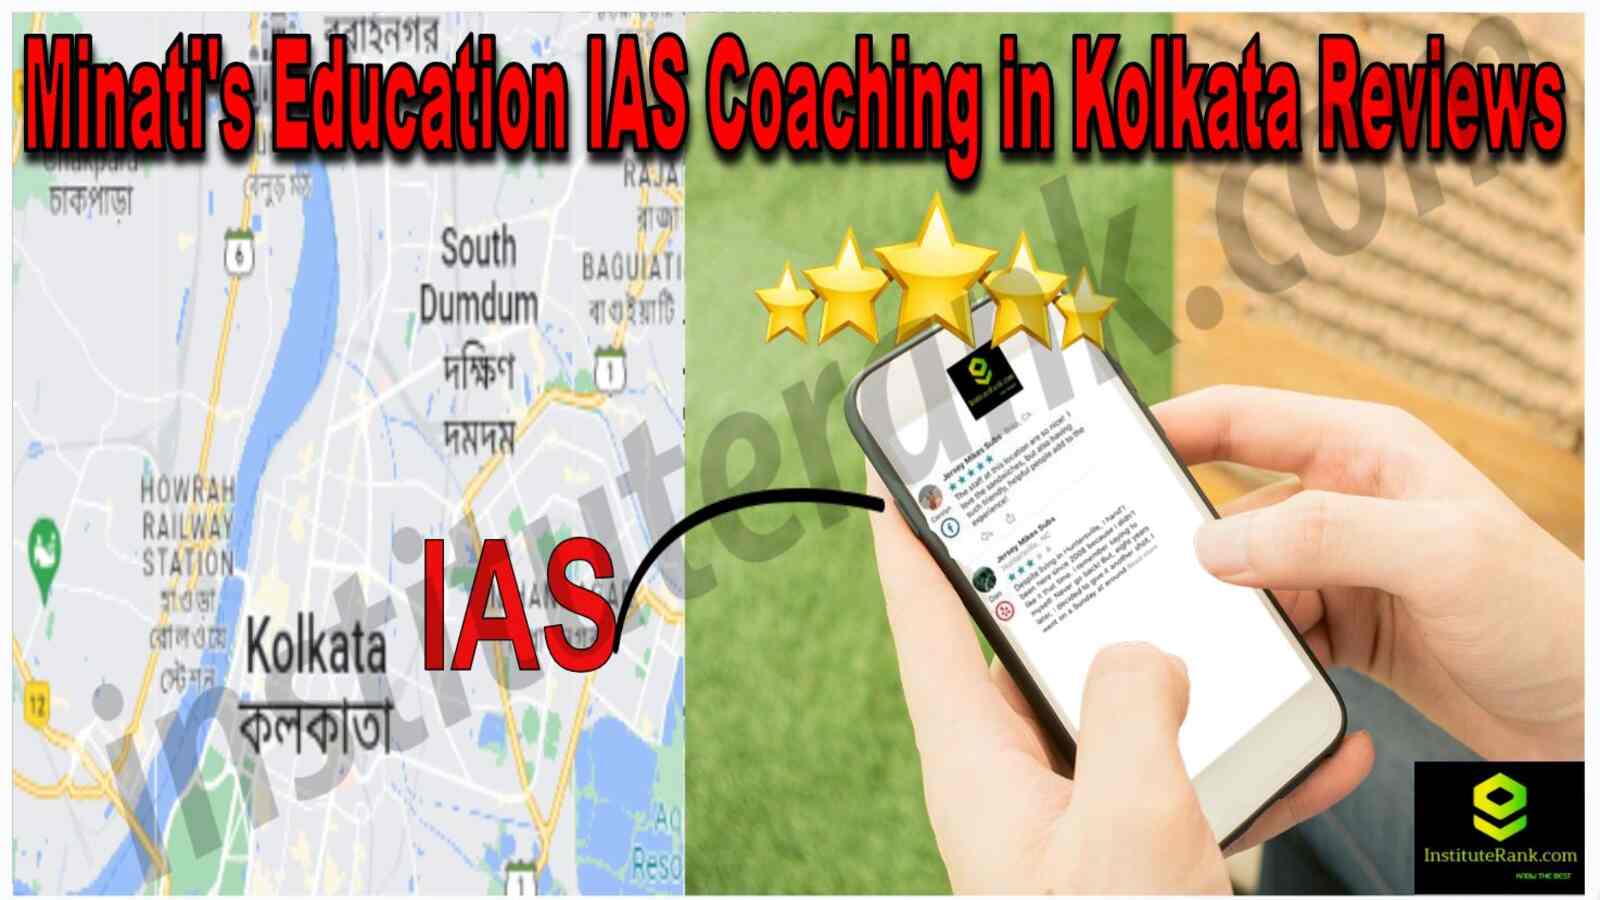 Minati's Education IAS Coaching in Kolkata Reviews